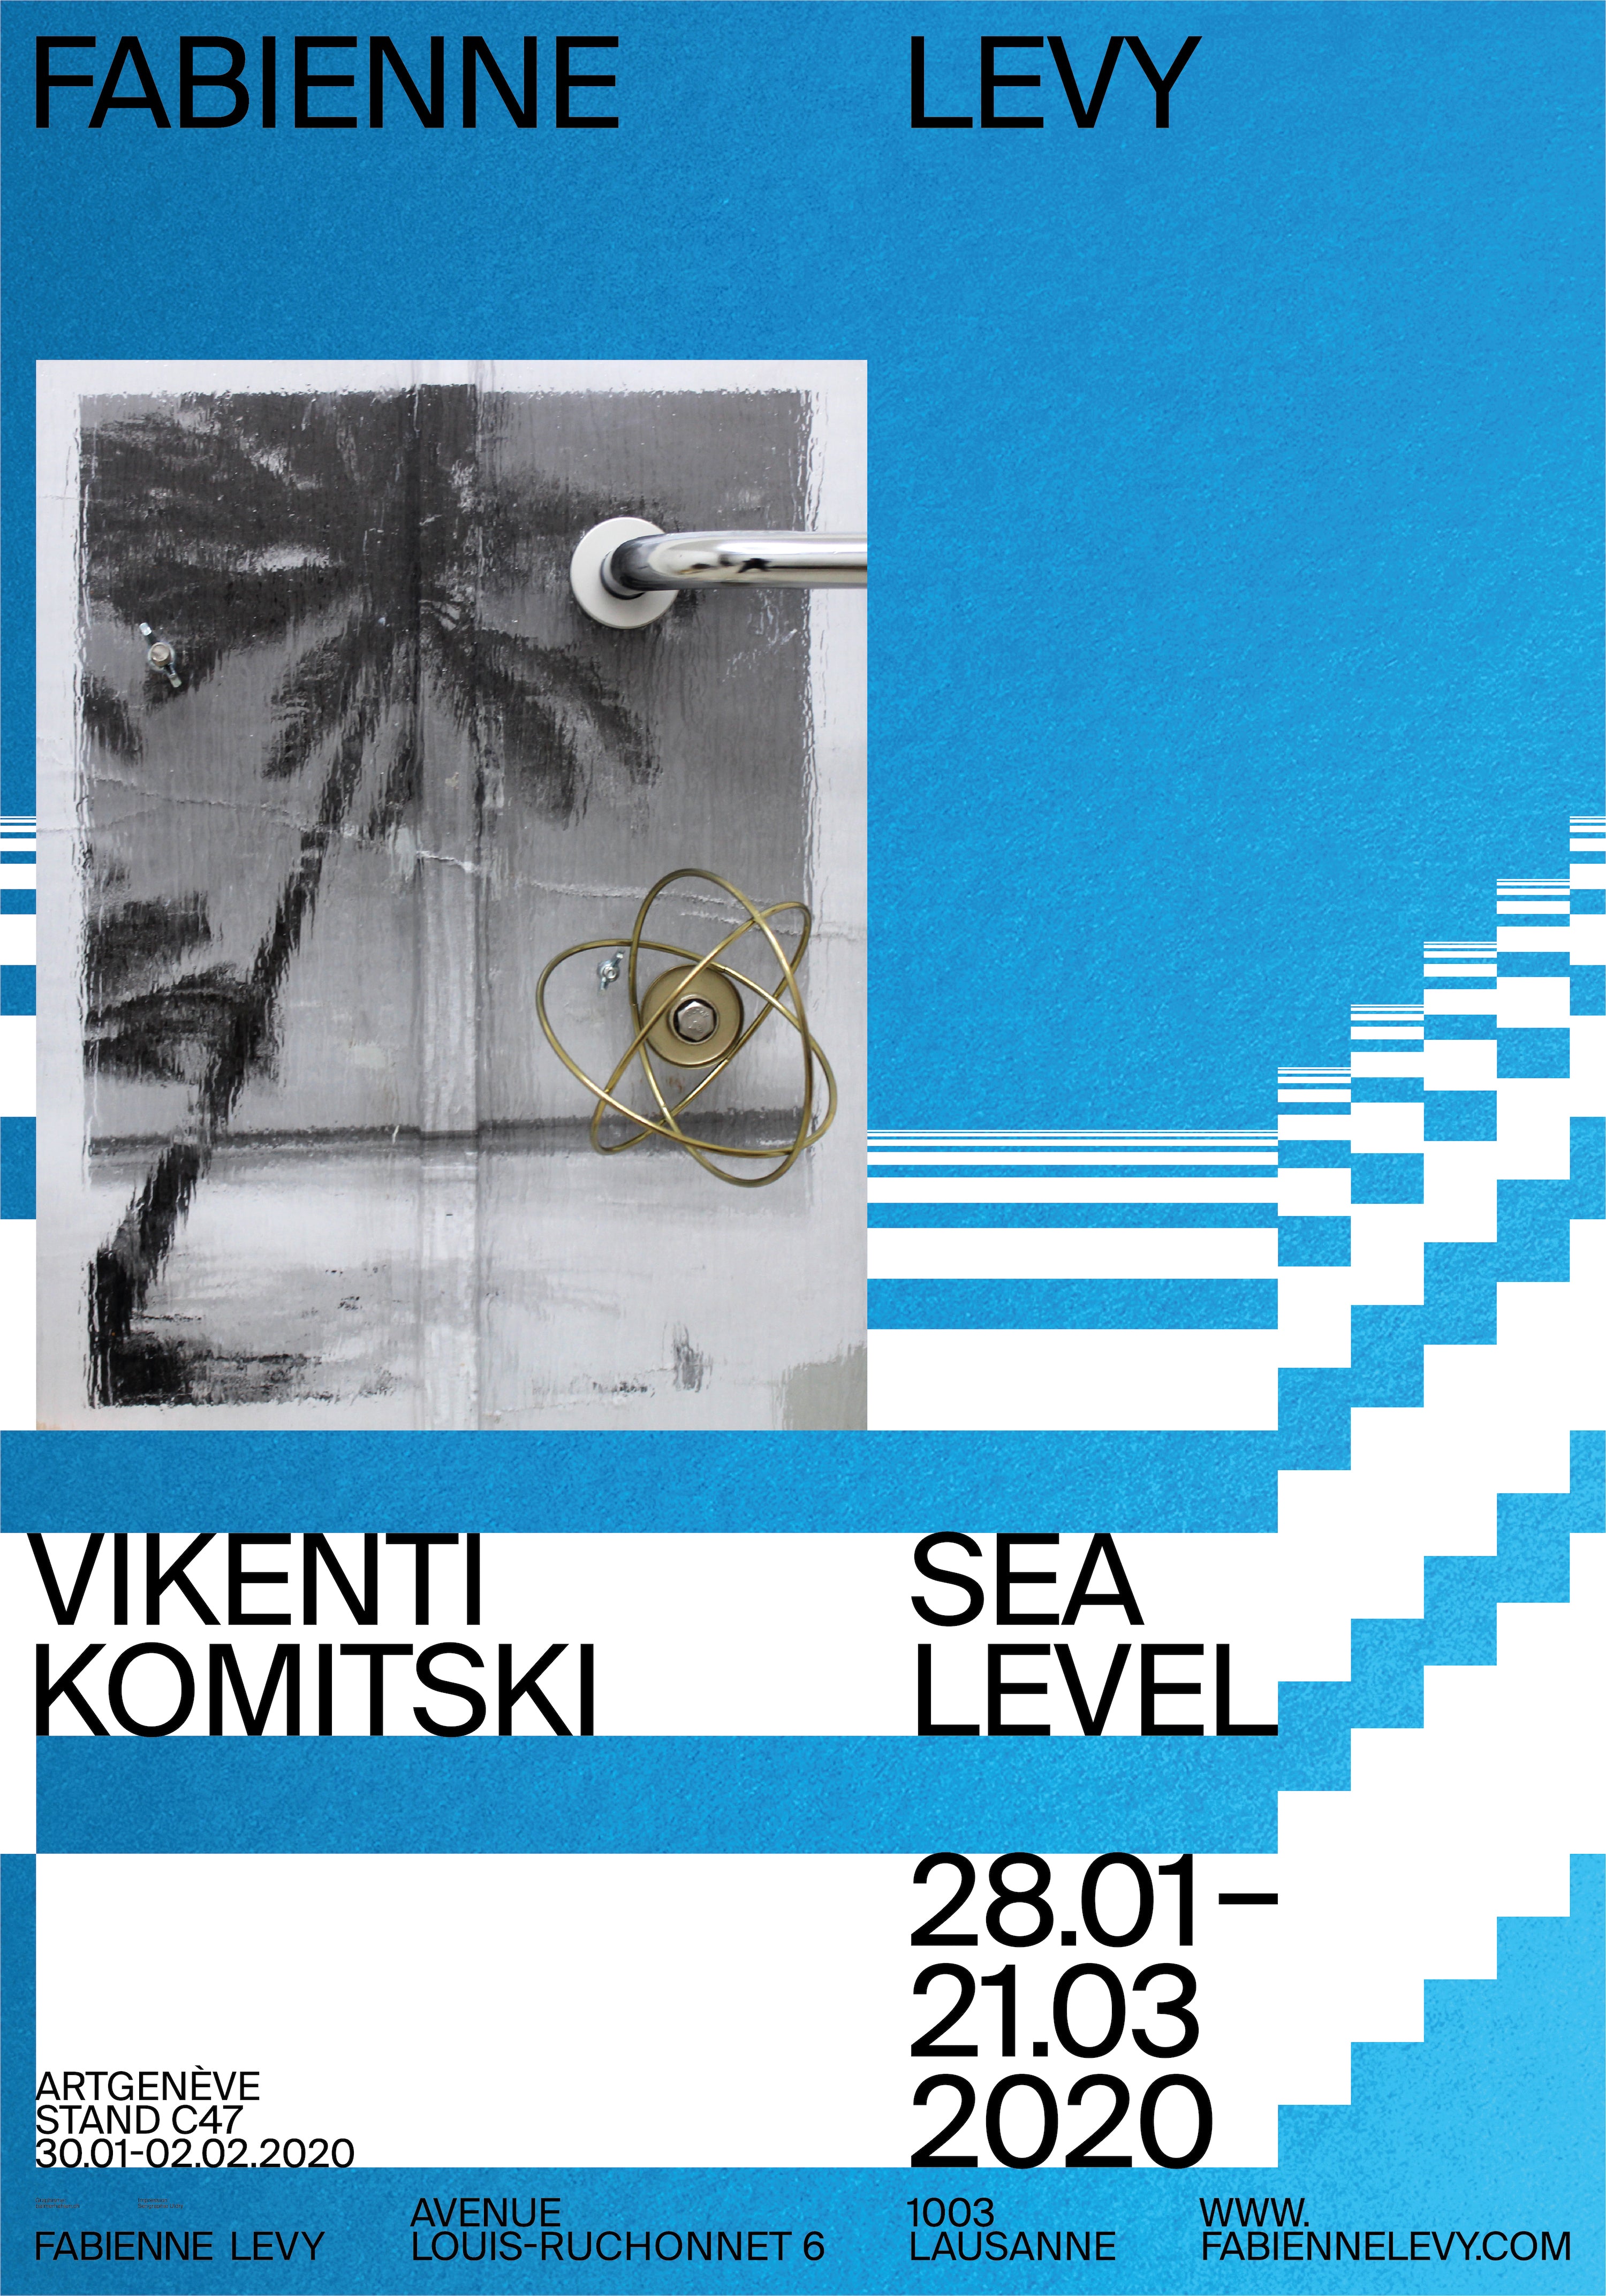 Vikenti Komitski - Show & Statement Posters